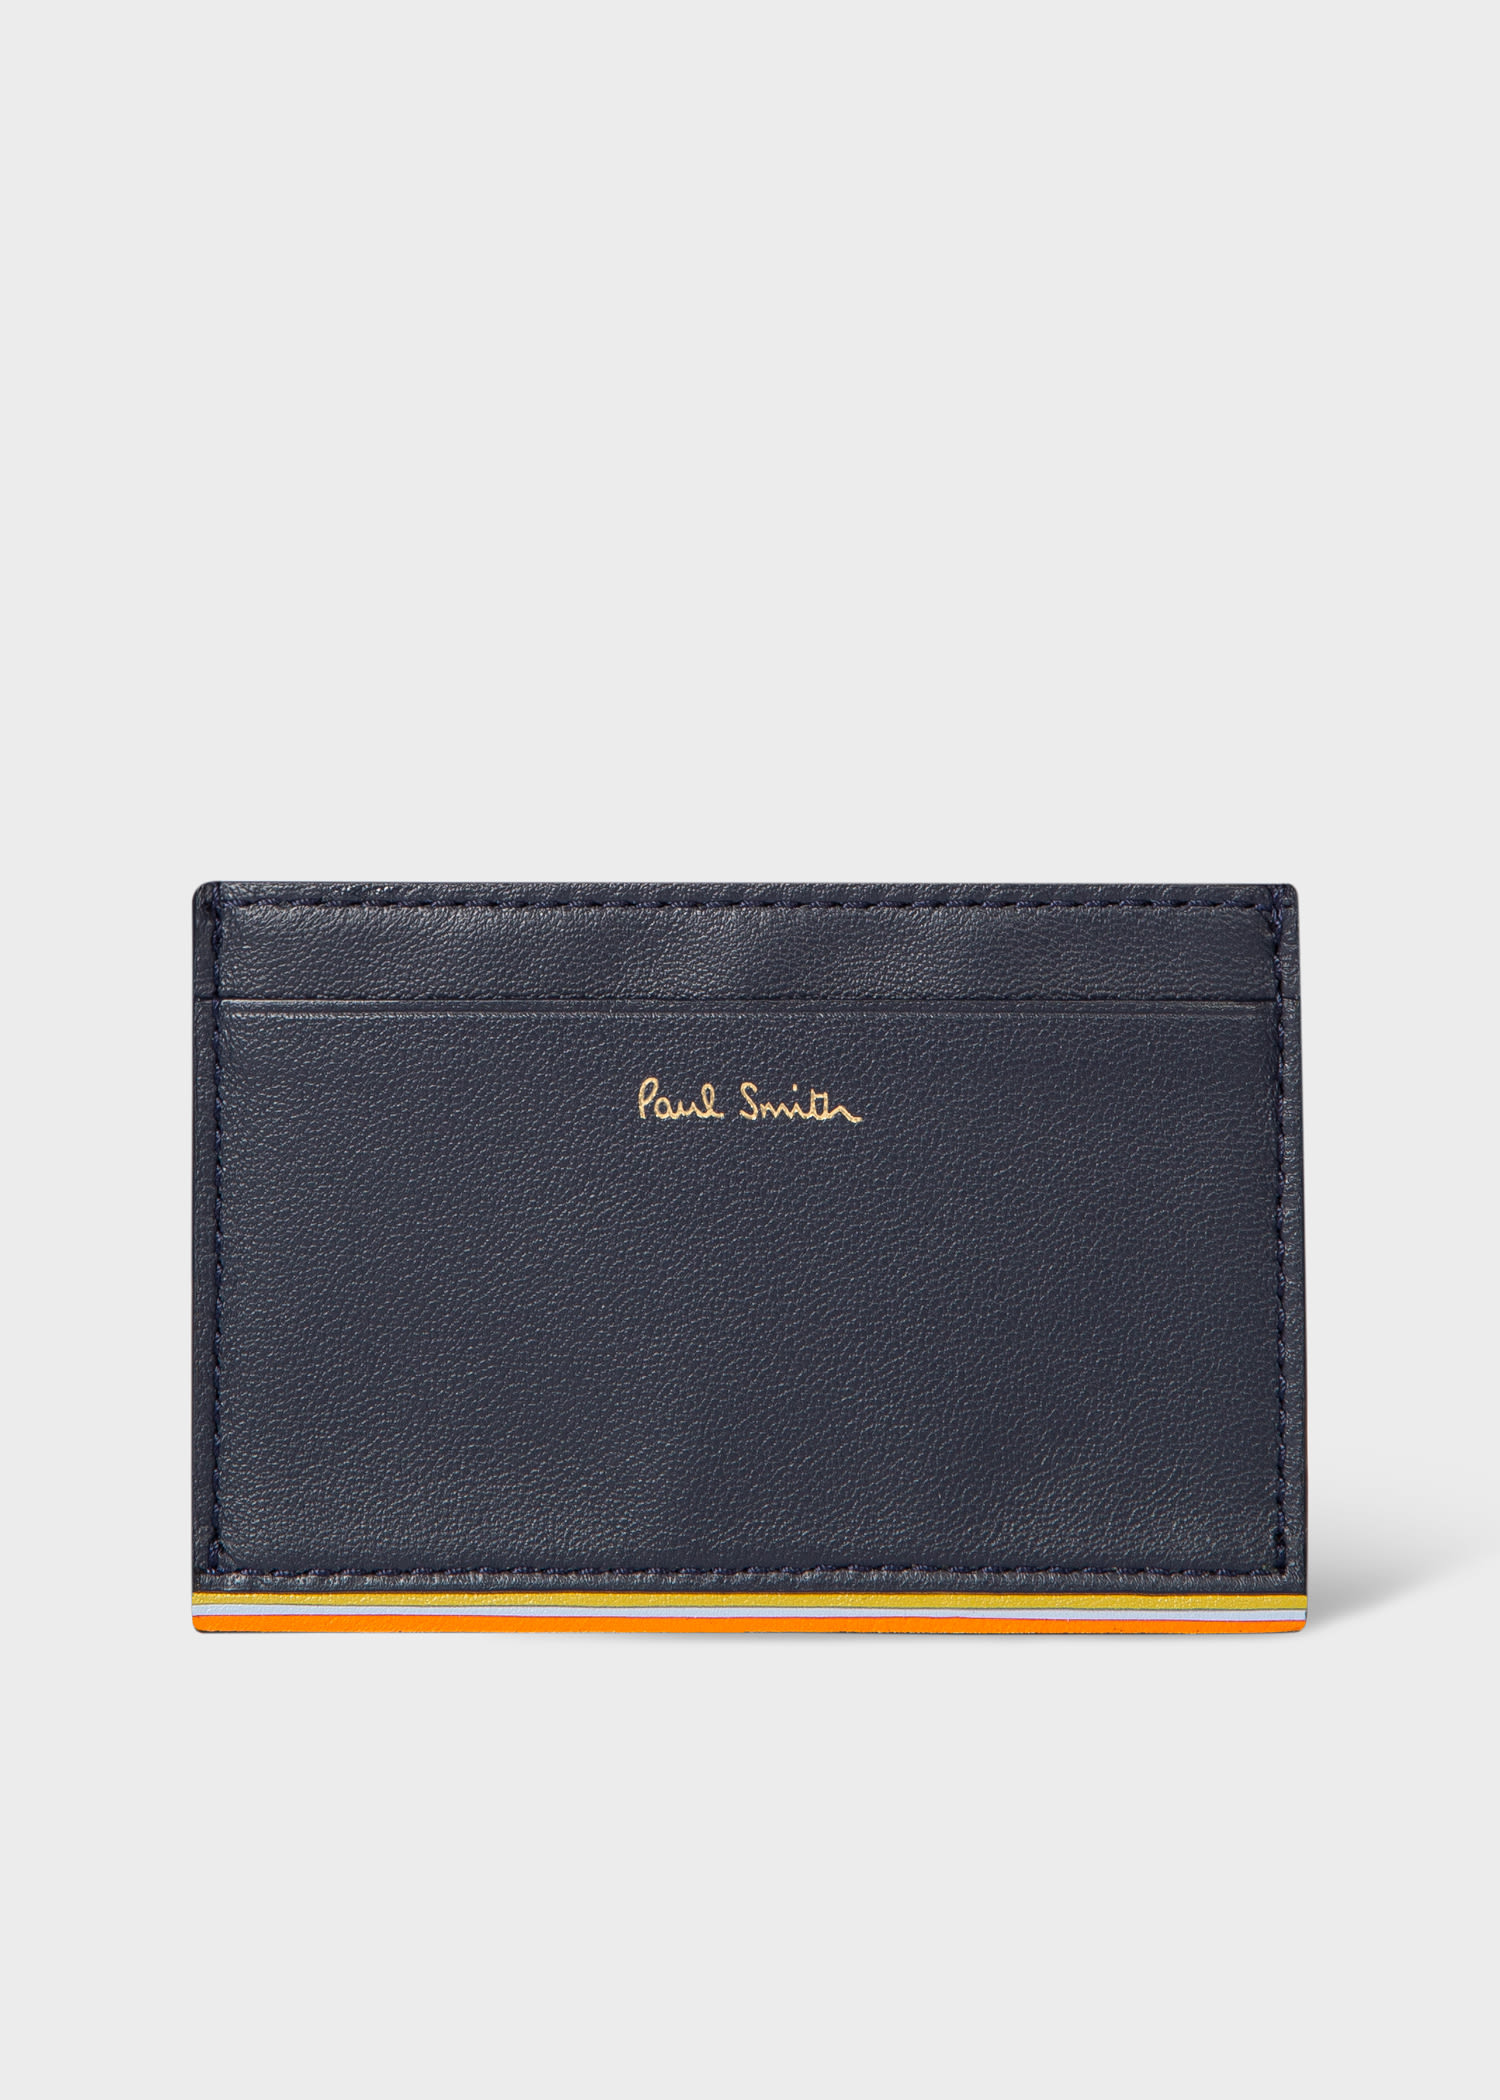 Men's Designer Leather Wallets, Money Clips & Card Holders - Paul 